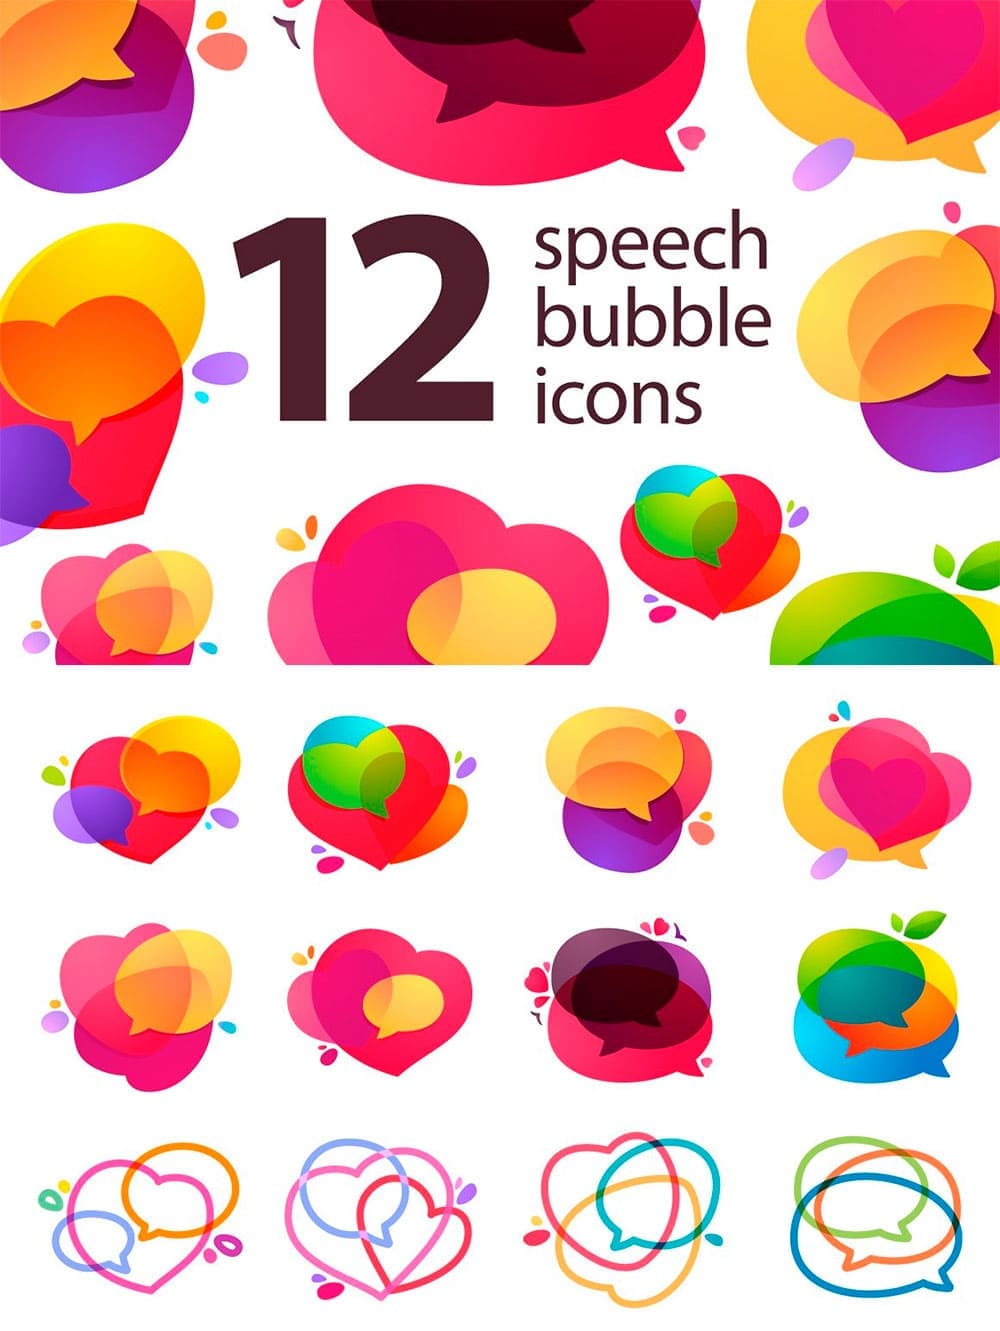 12 speech bubble icons, picture for pinterest.